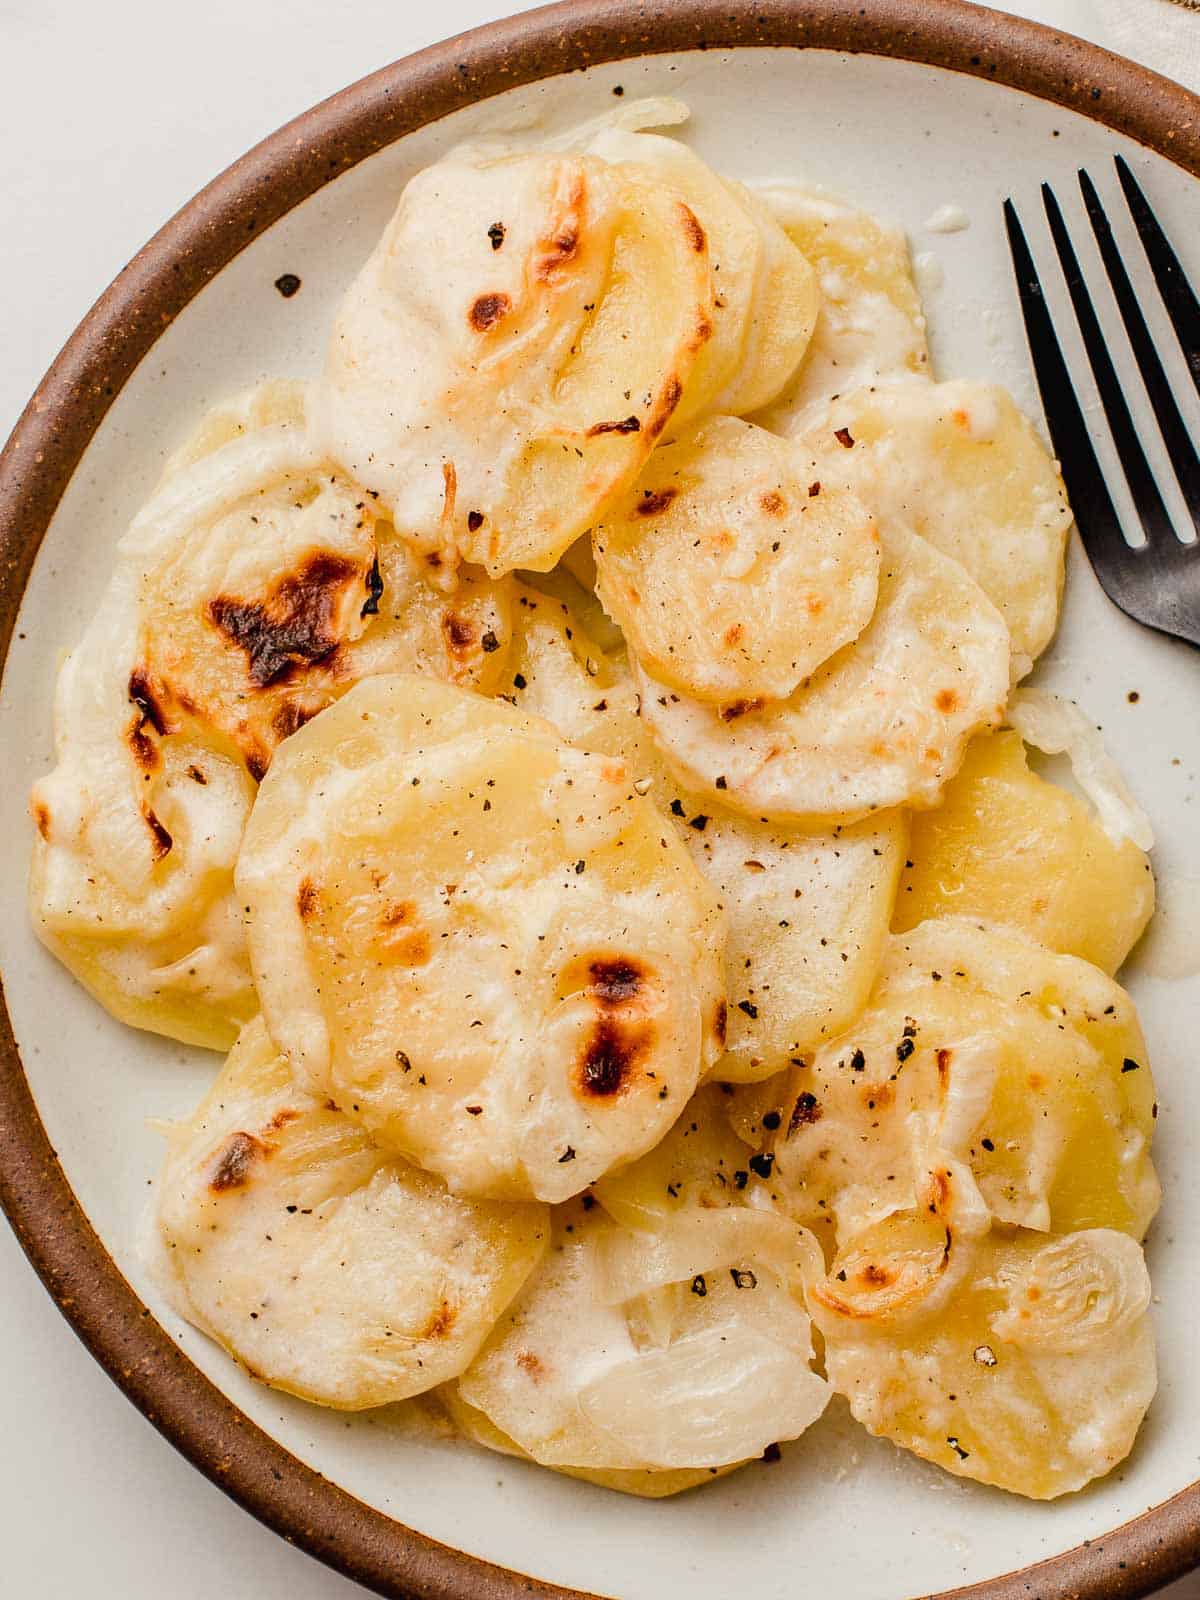 Scalloped potatoes on a plate.